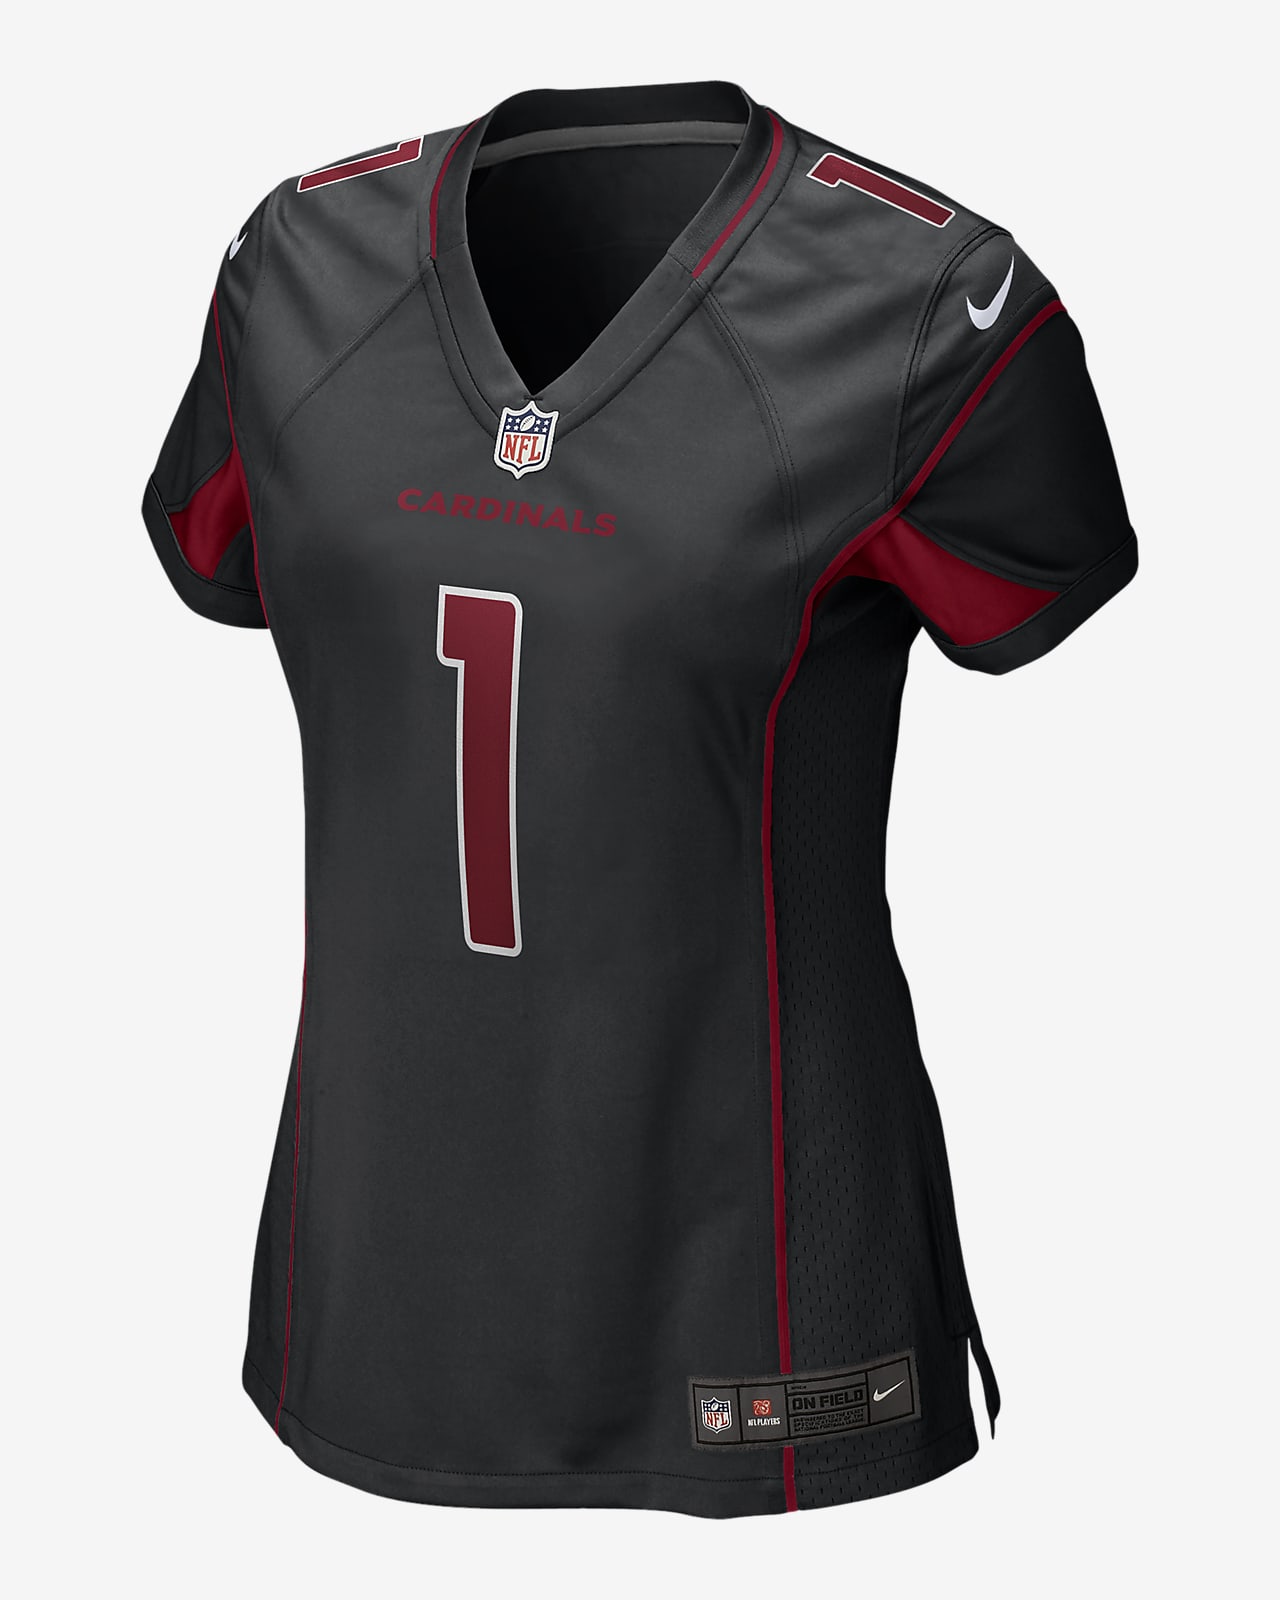 Camiseta de fútbol americano Game para mujer NFL Arizona Cardinals (Kyler Murray)